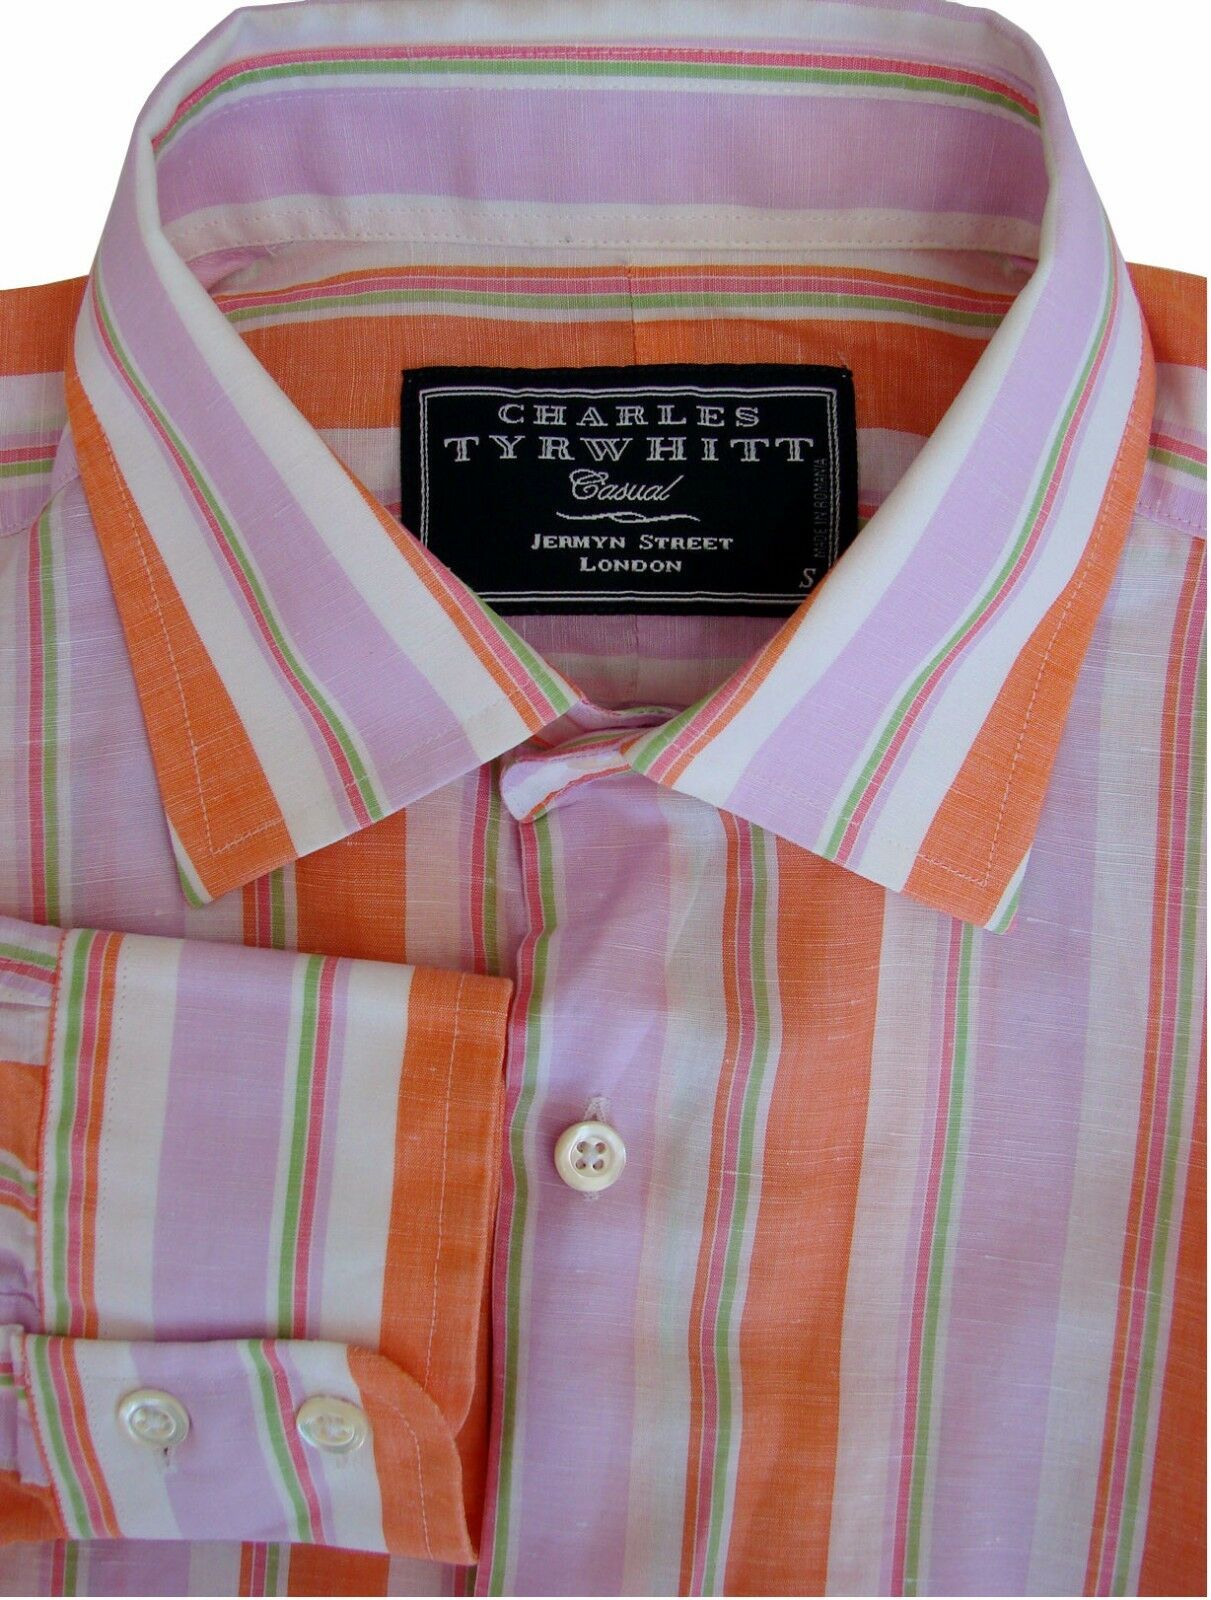 THOMAS PINK Shirt Mens 15 S Pink – Stripes - Brandinity